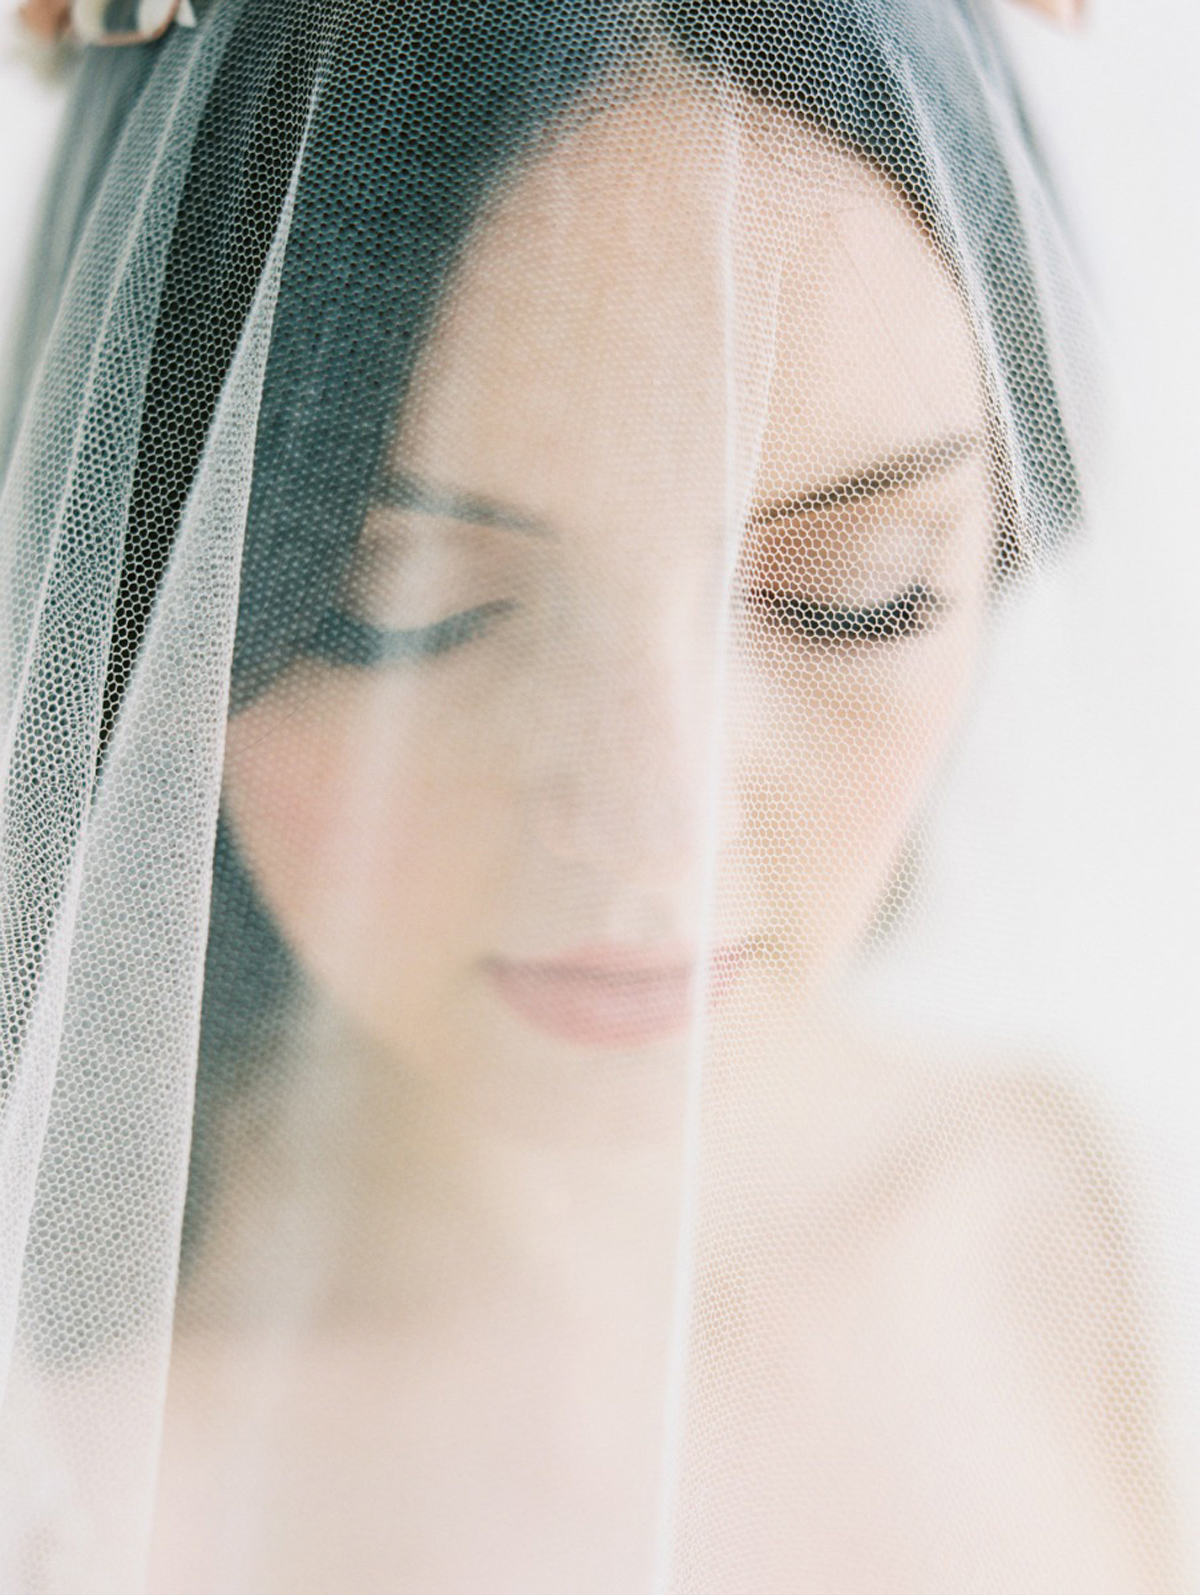 La Belle - classic, contemporary, fine art and romantic handmade wedding veils, headpieces and bridal adornments.